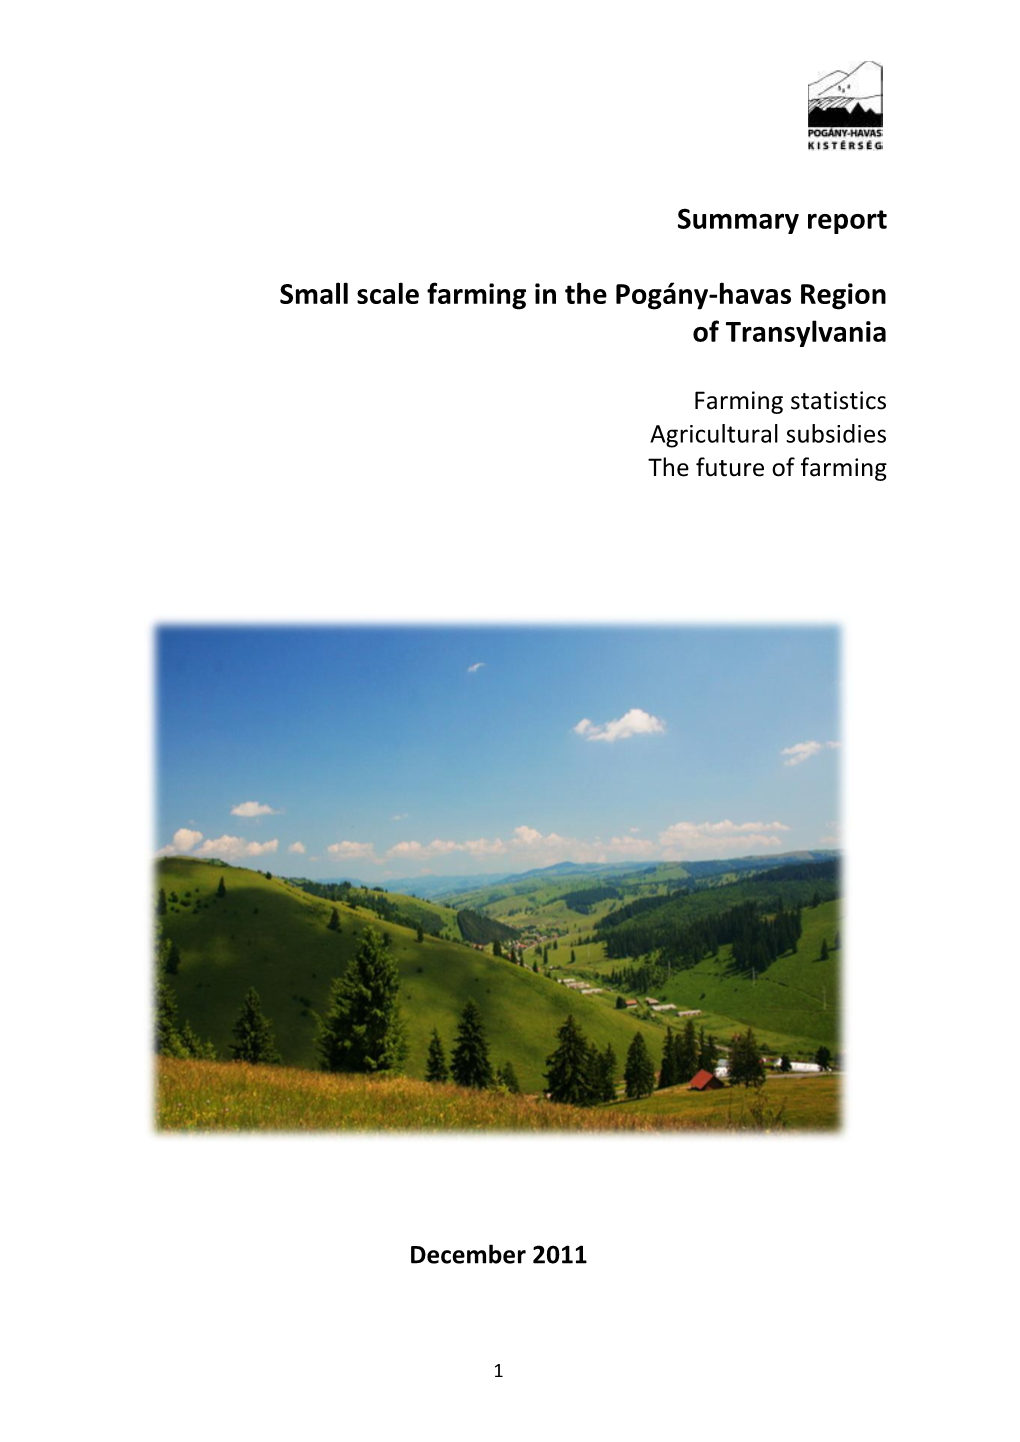 Small Scale Farming in the Pogány-Havas Region of Transylvania. Summary Report